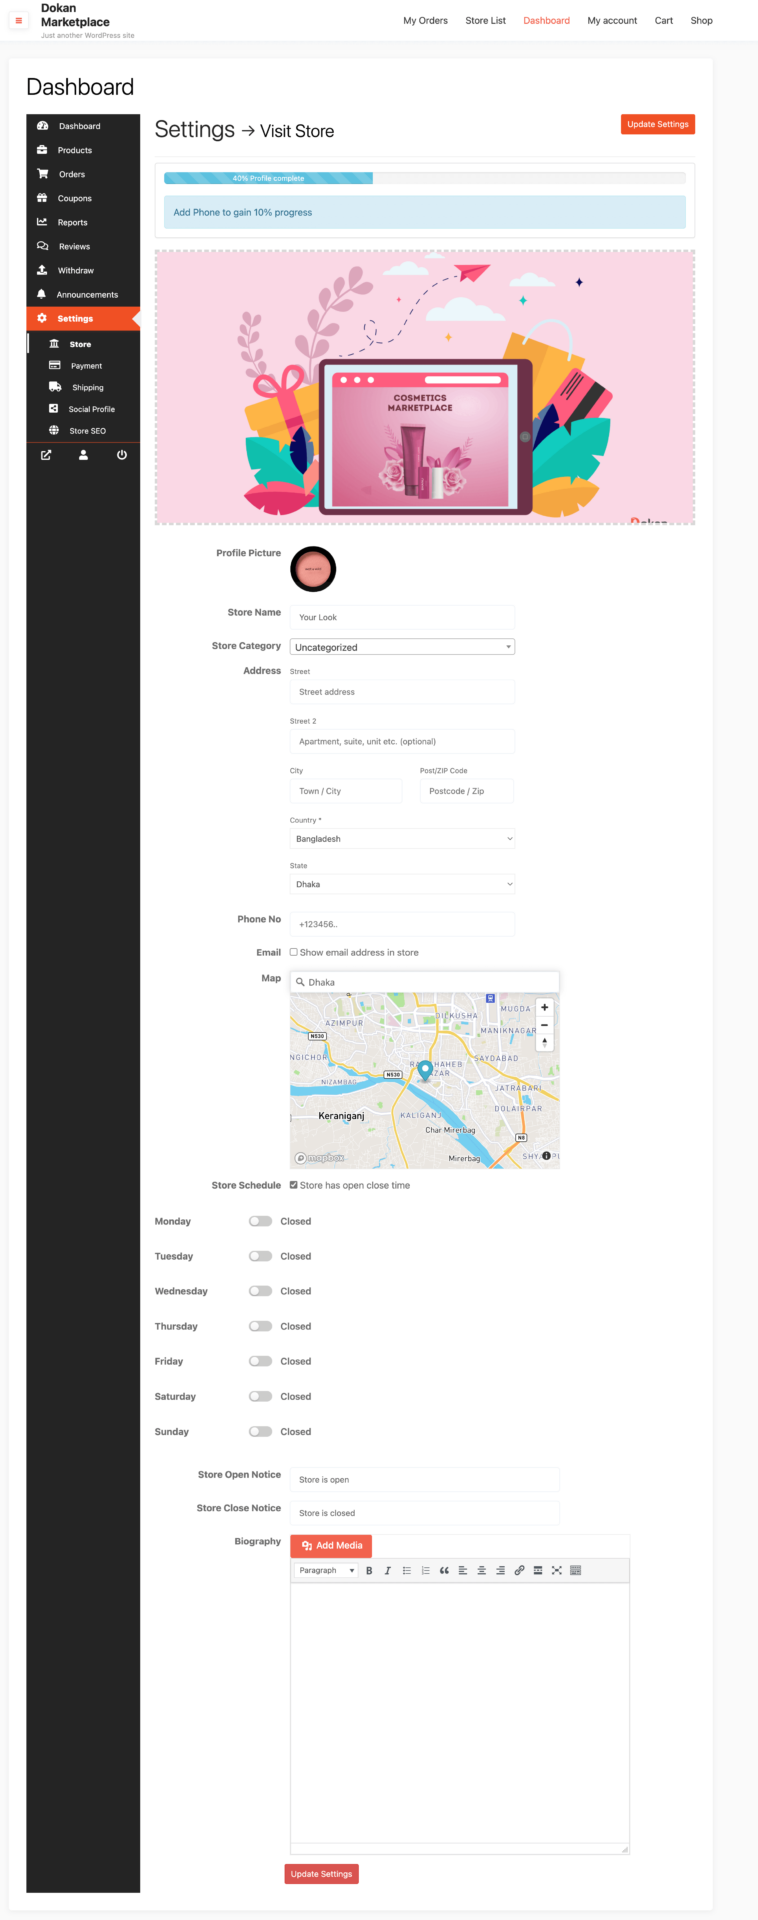 This is a screenshot of a Dokan Vendor Dashboard Settings